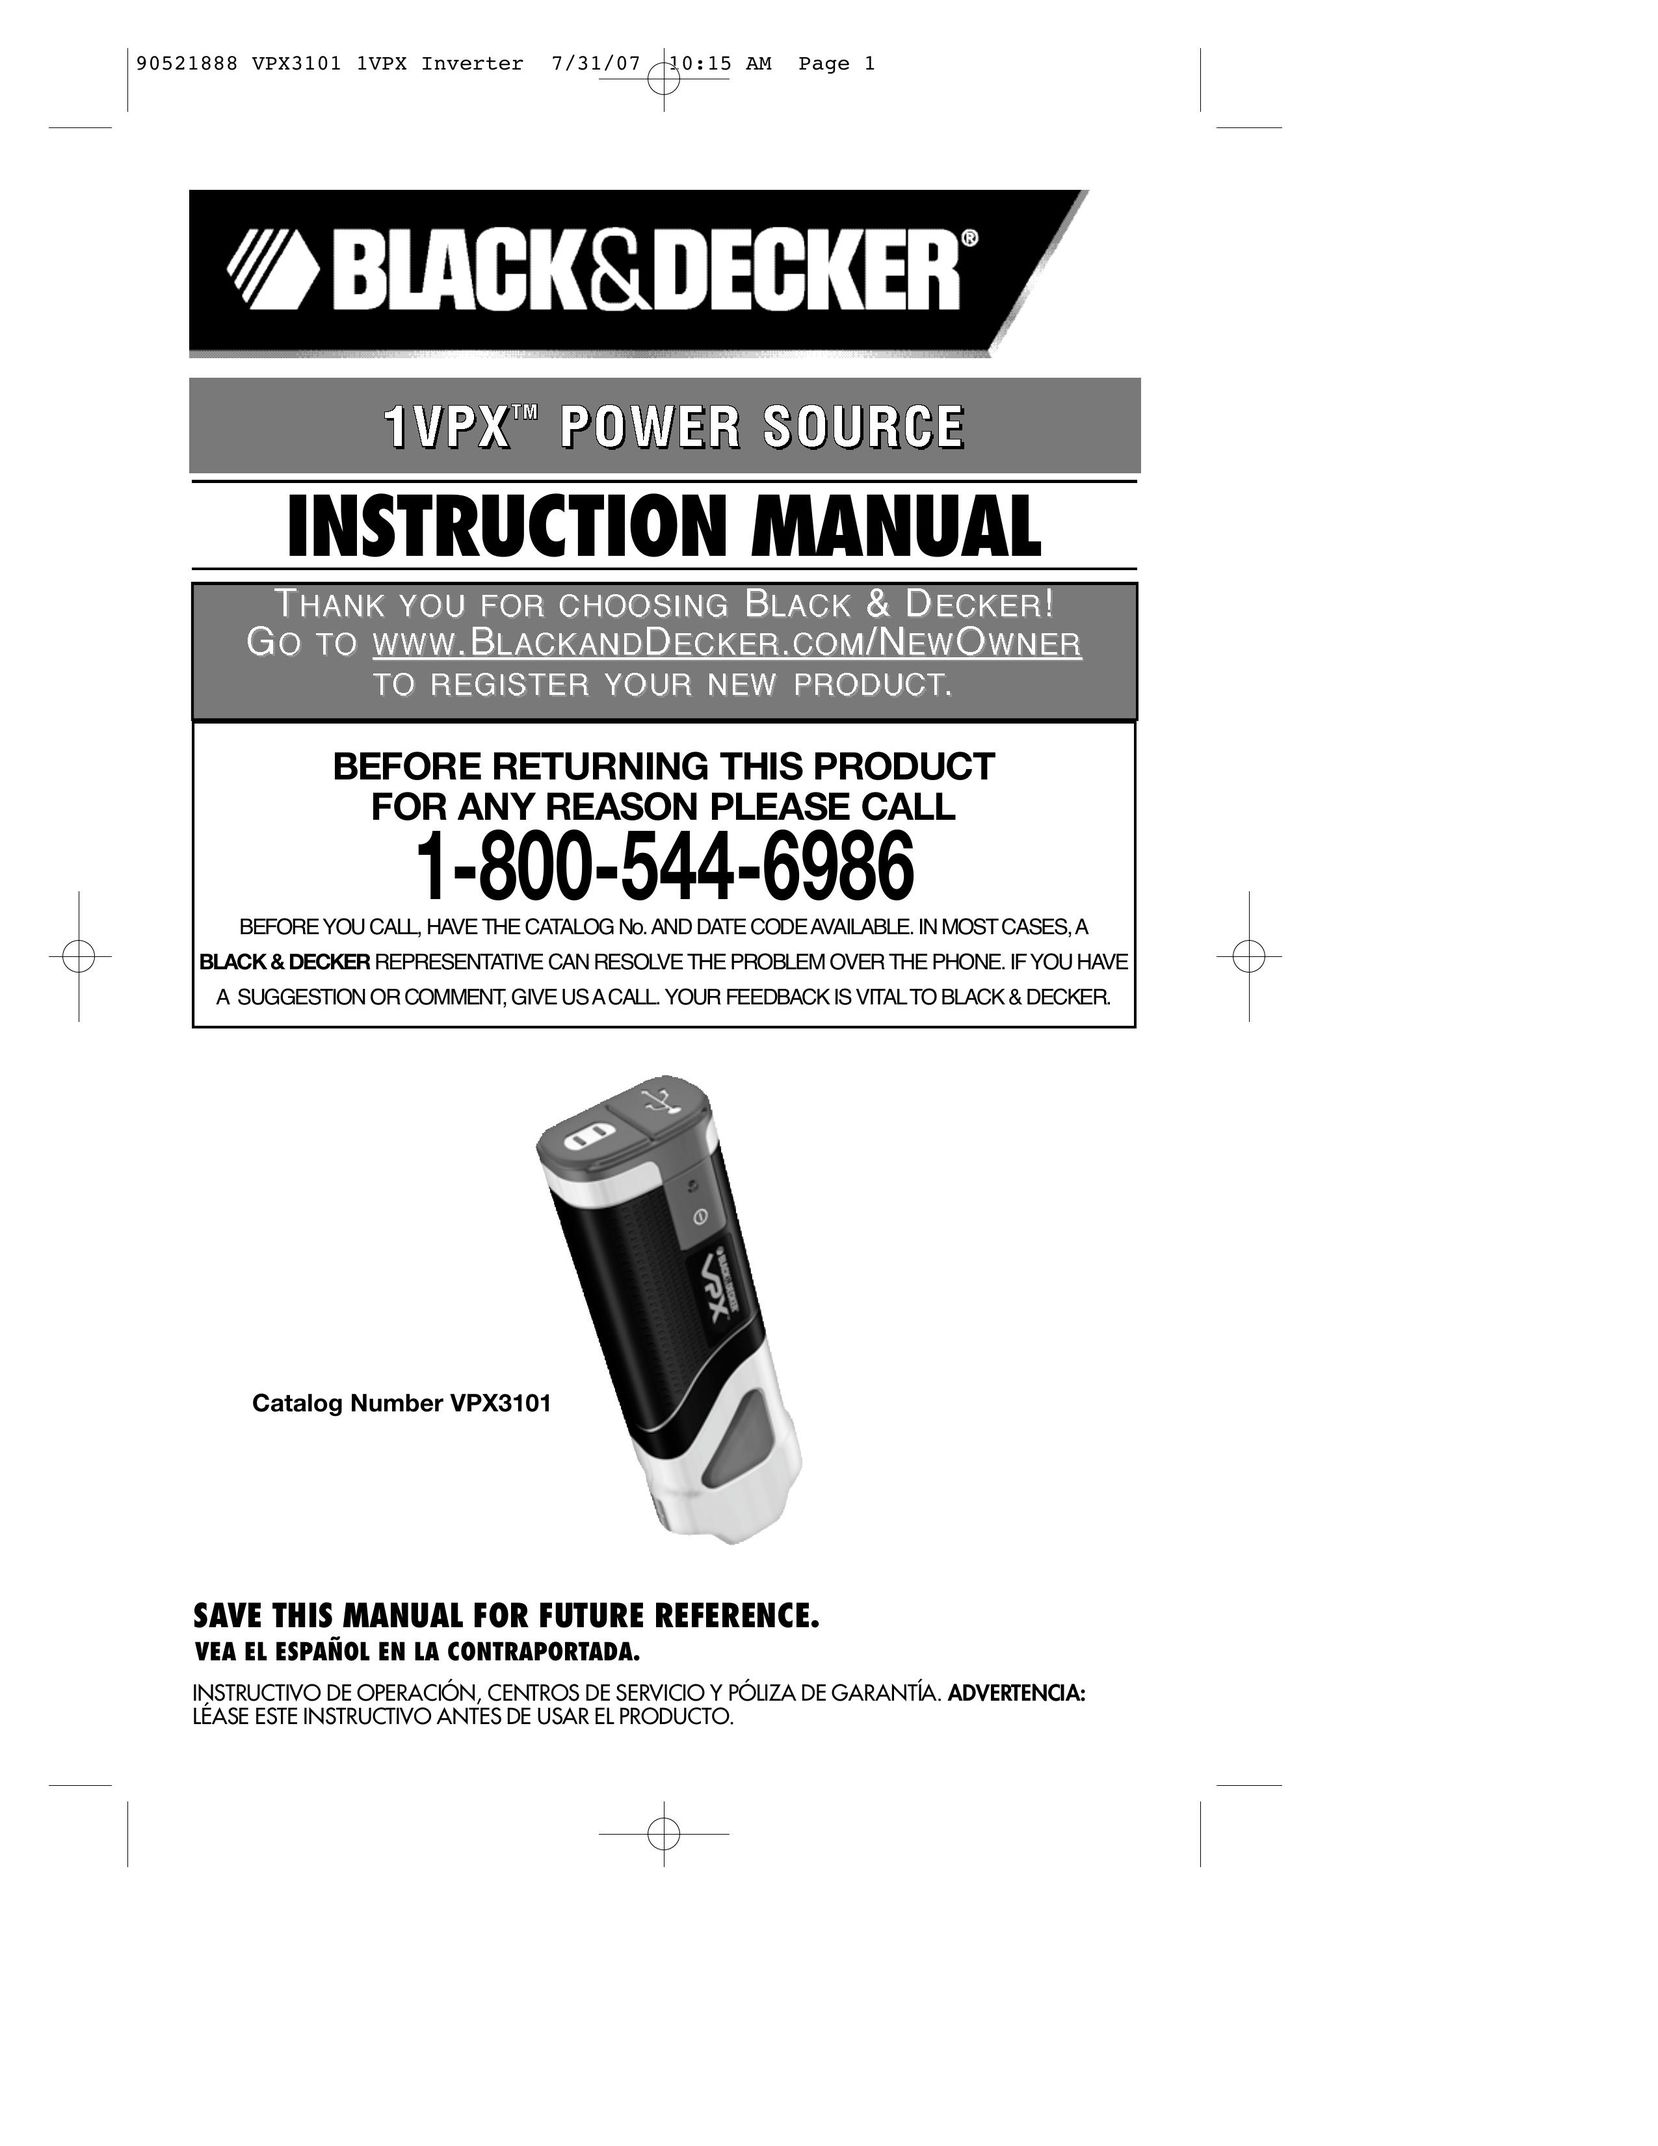 Black & Decker 90521888 Power Supply User Manual